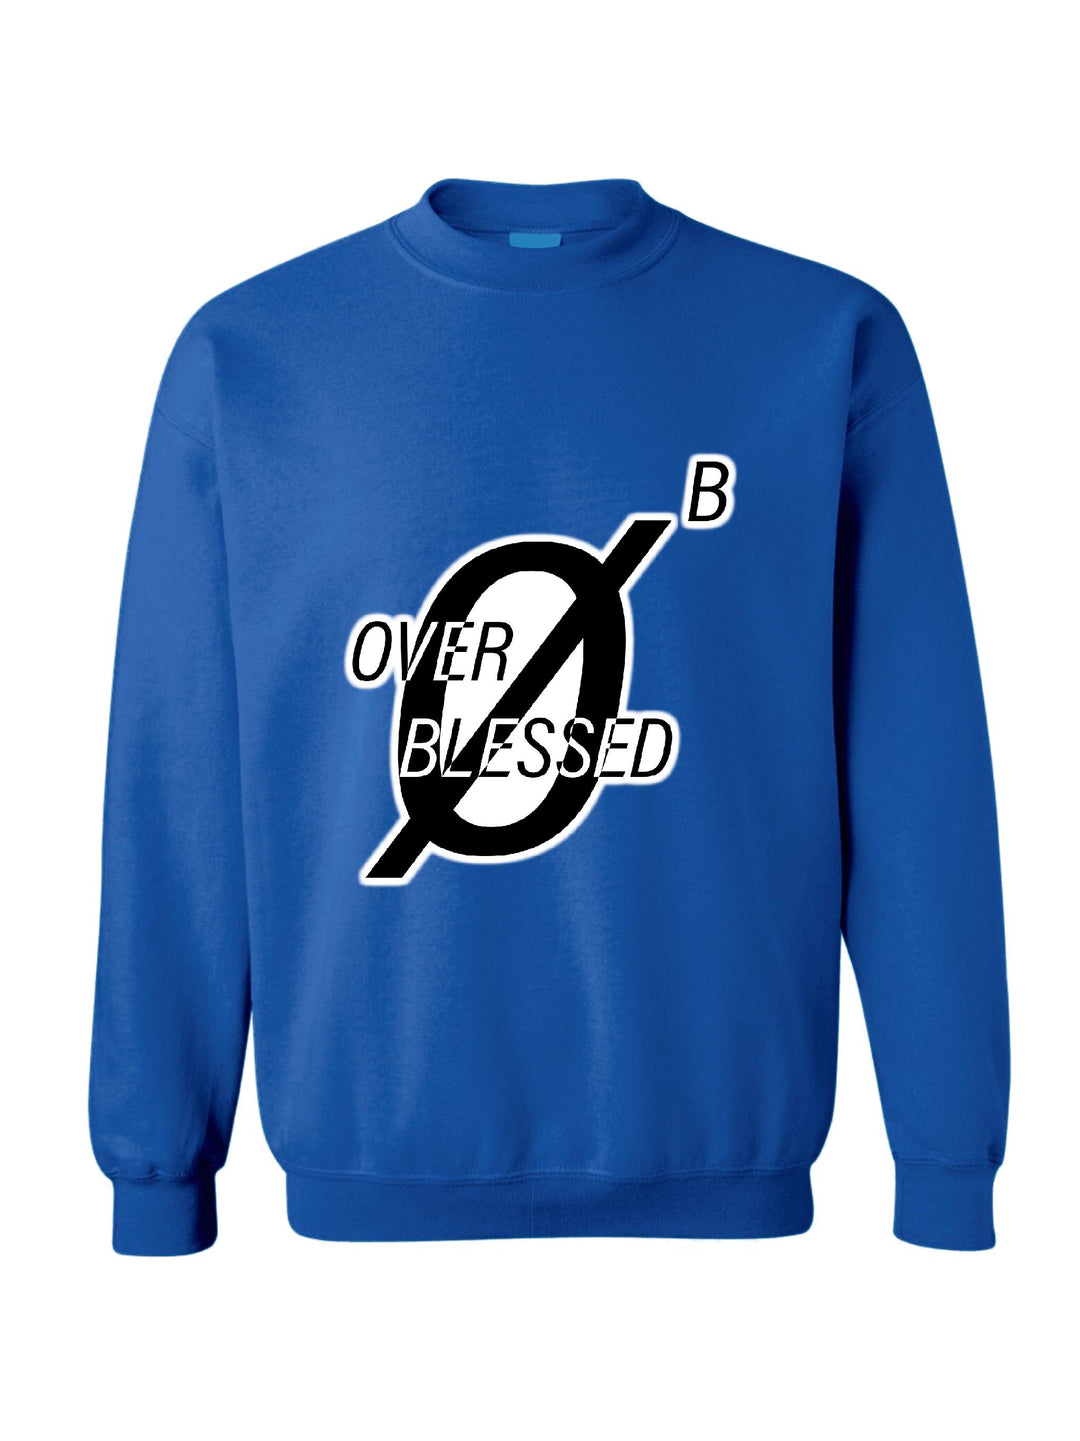 Overblessed Crewneck Sweatshirt